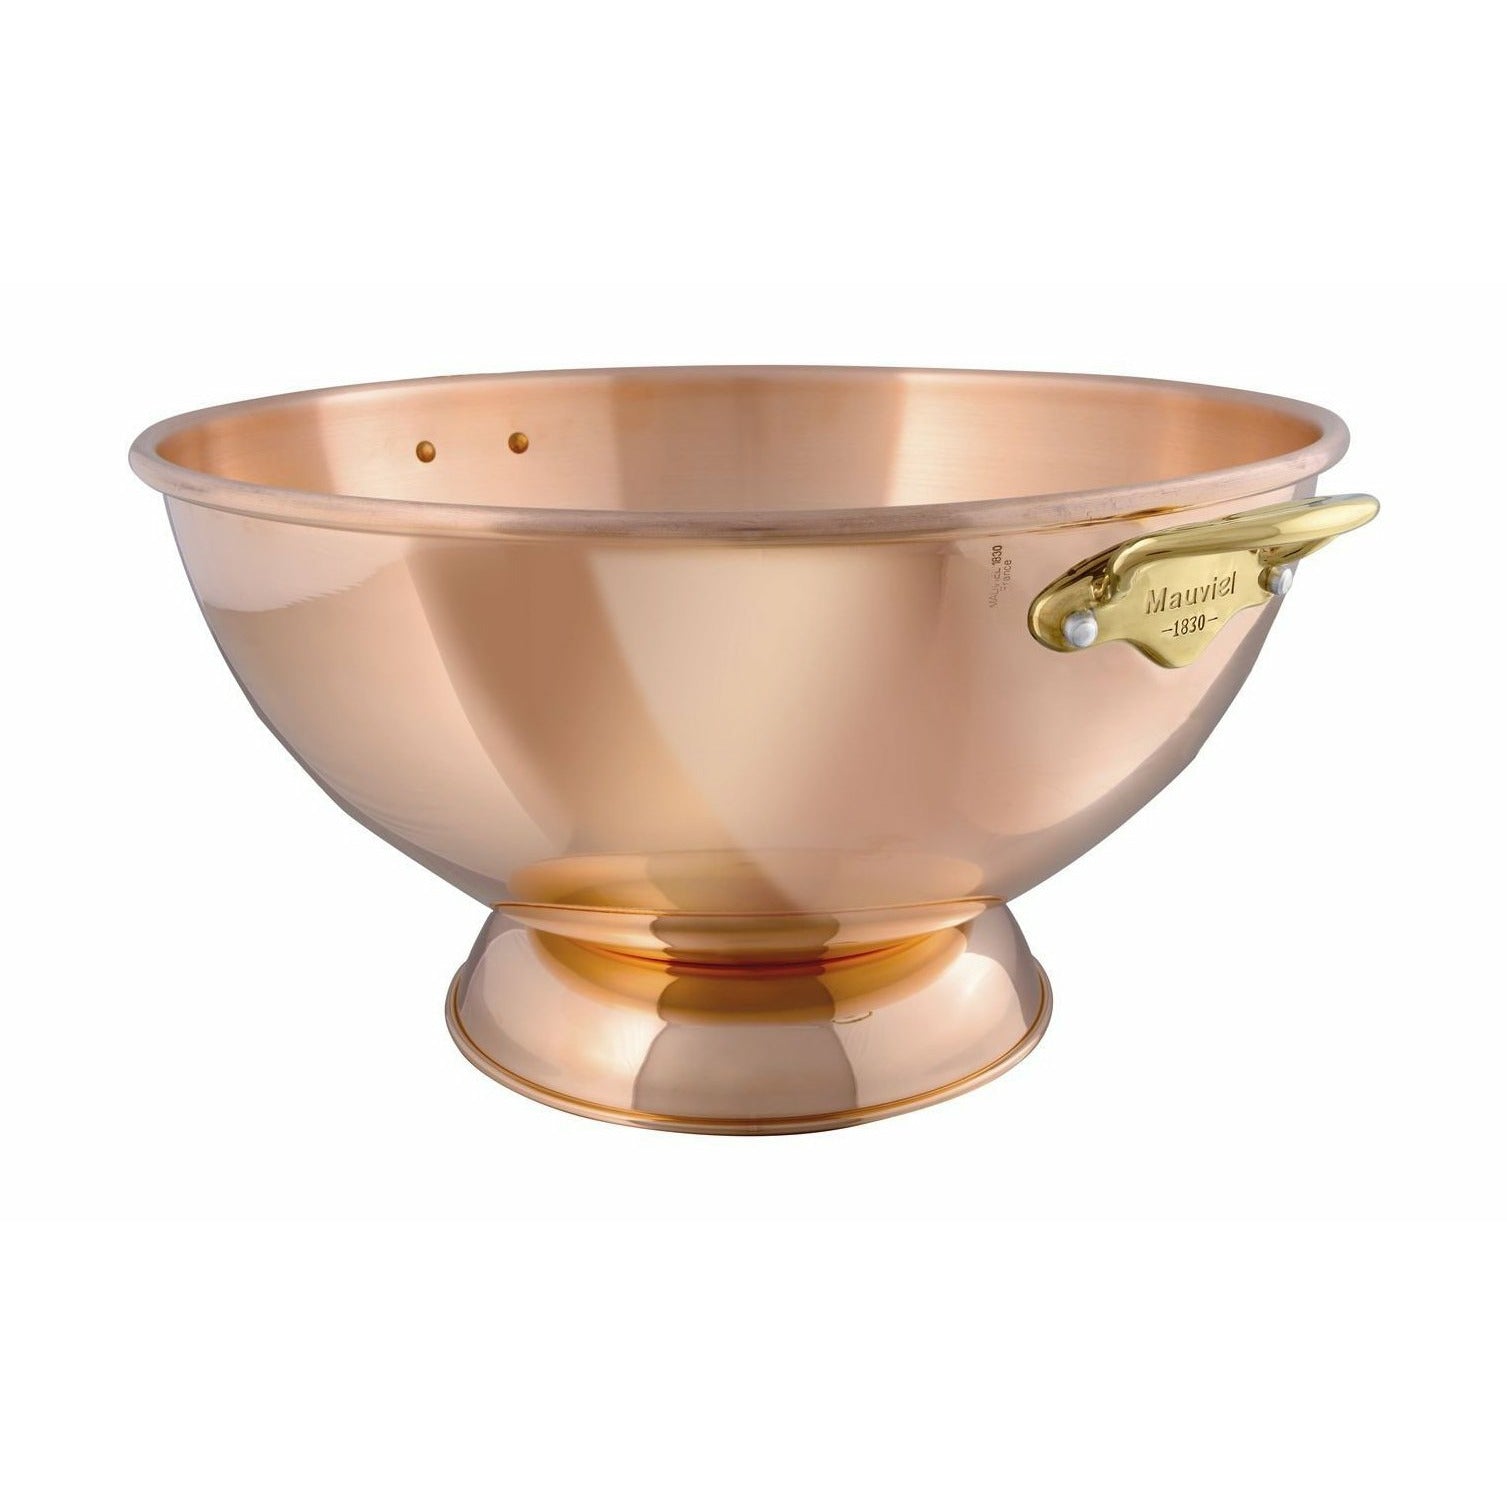 Mauviel香槟碗铜，Ø40厘米